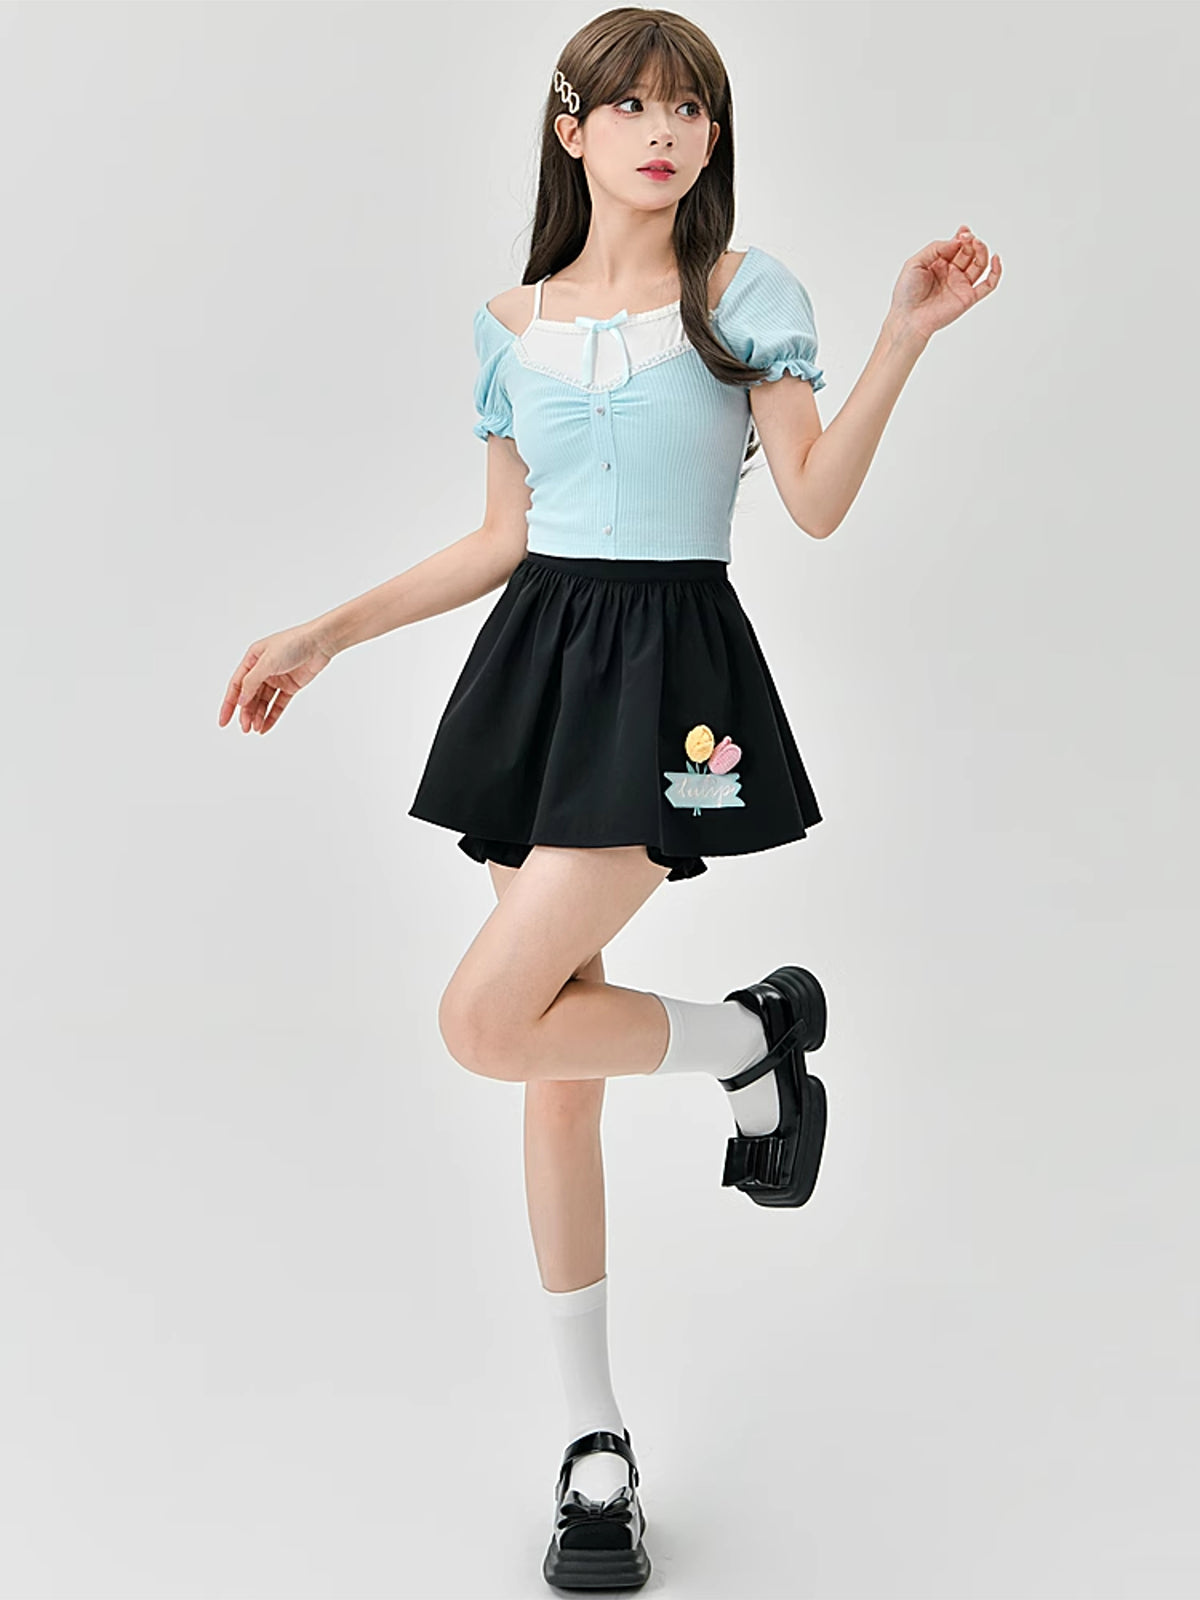 Cute Tulip High-Waisted Black Skirt with Undies-ntbhshop